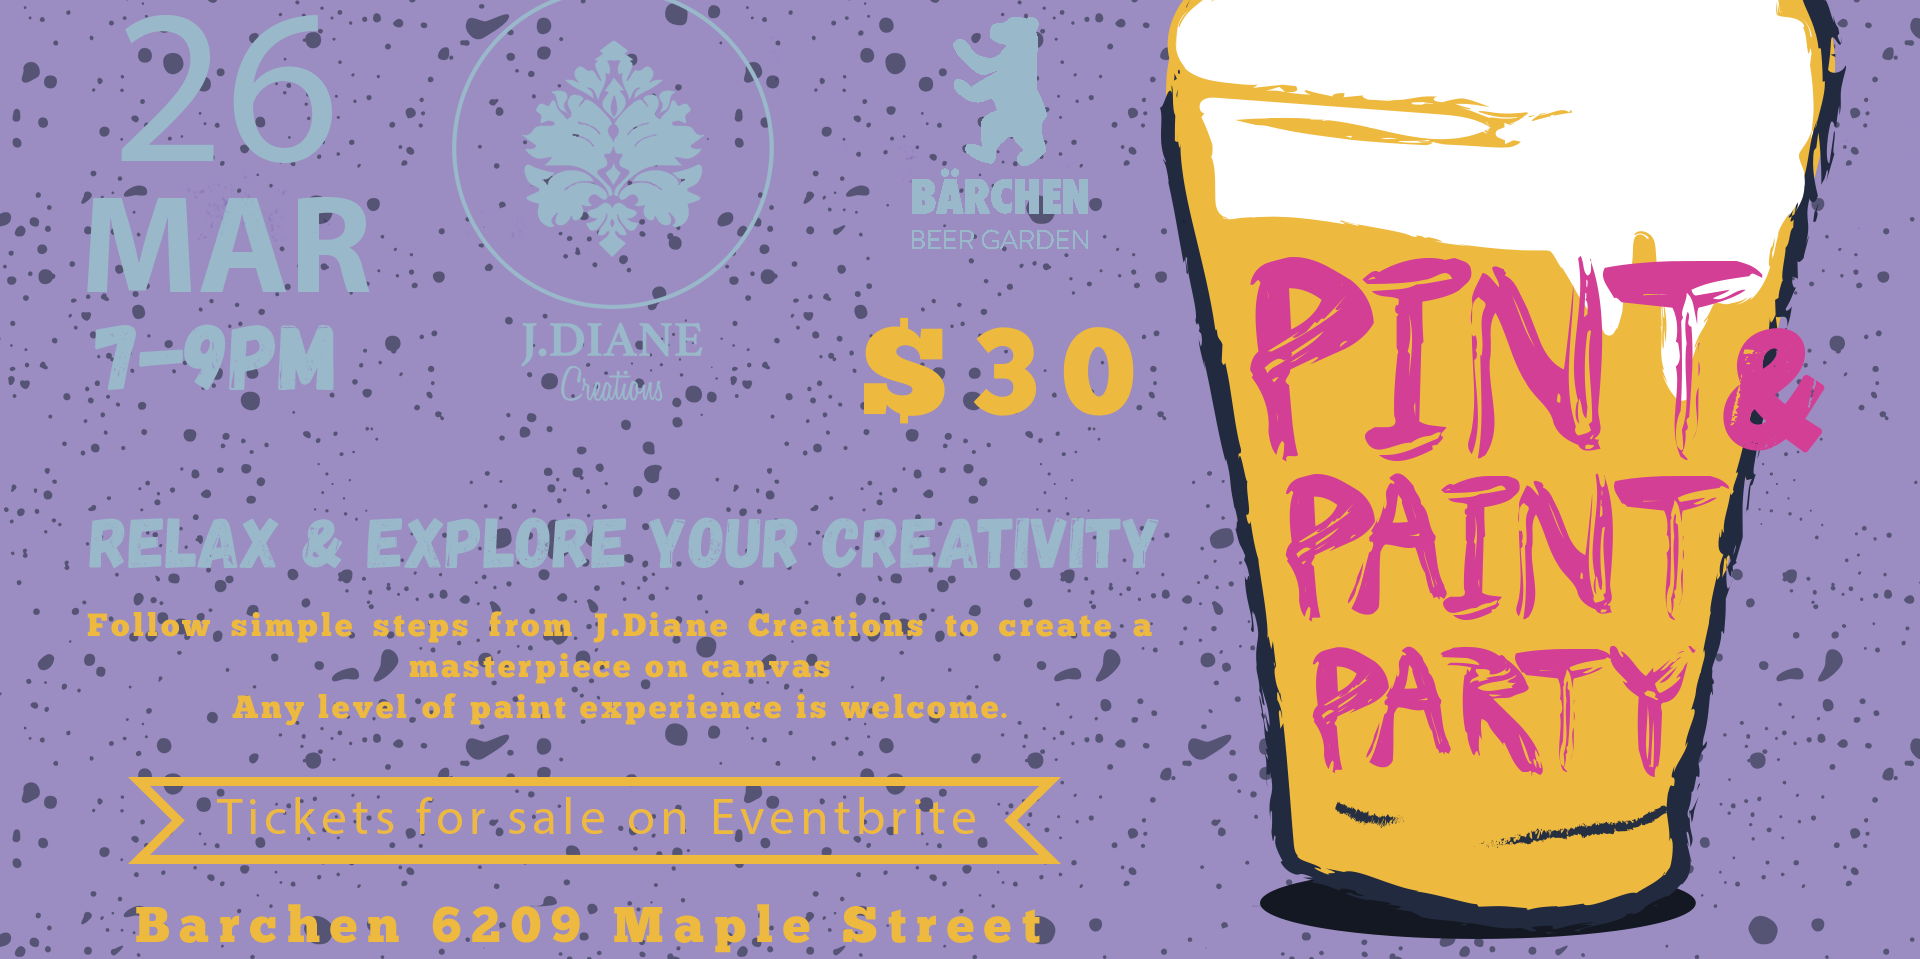 Pint & Paint Party promotional image